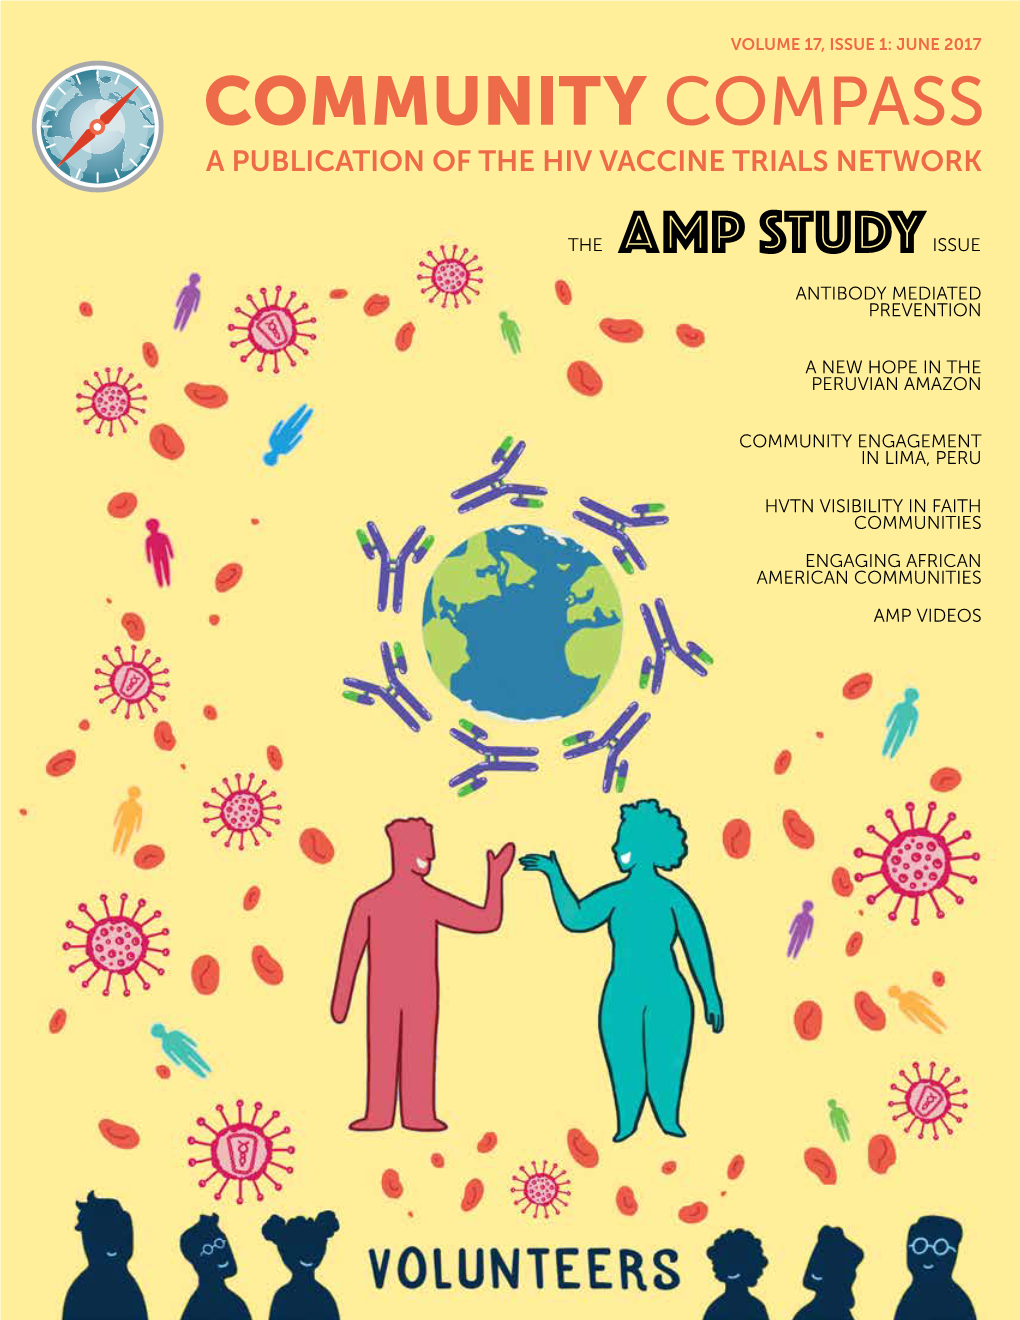 Amp Study Issue Antibody Mediated Prevention